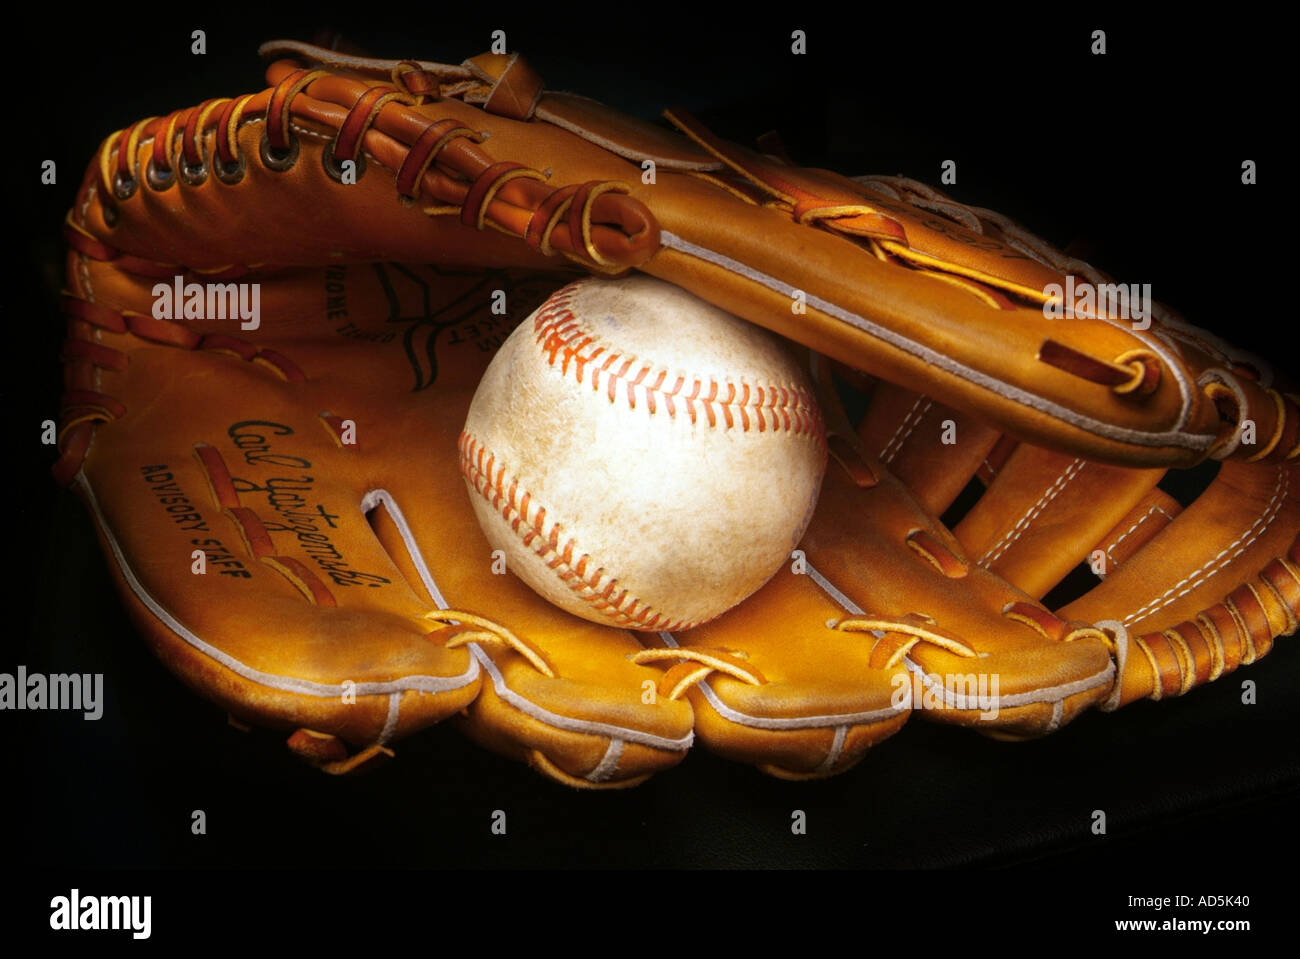 Baseball with baseball glove Stock Photo